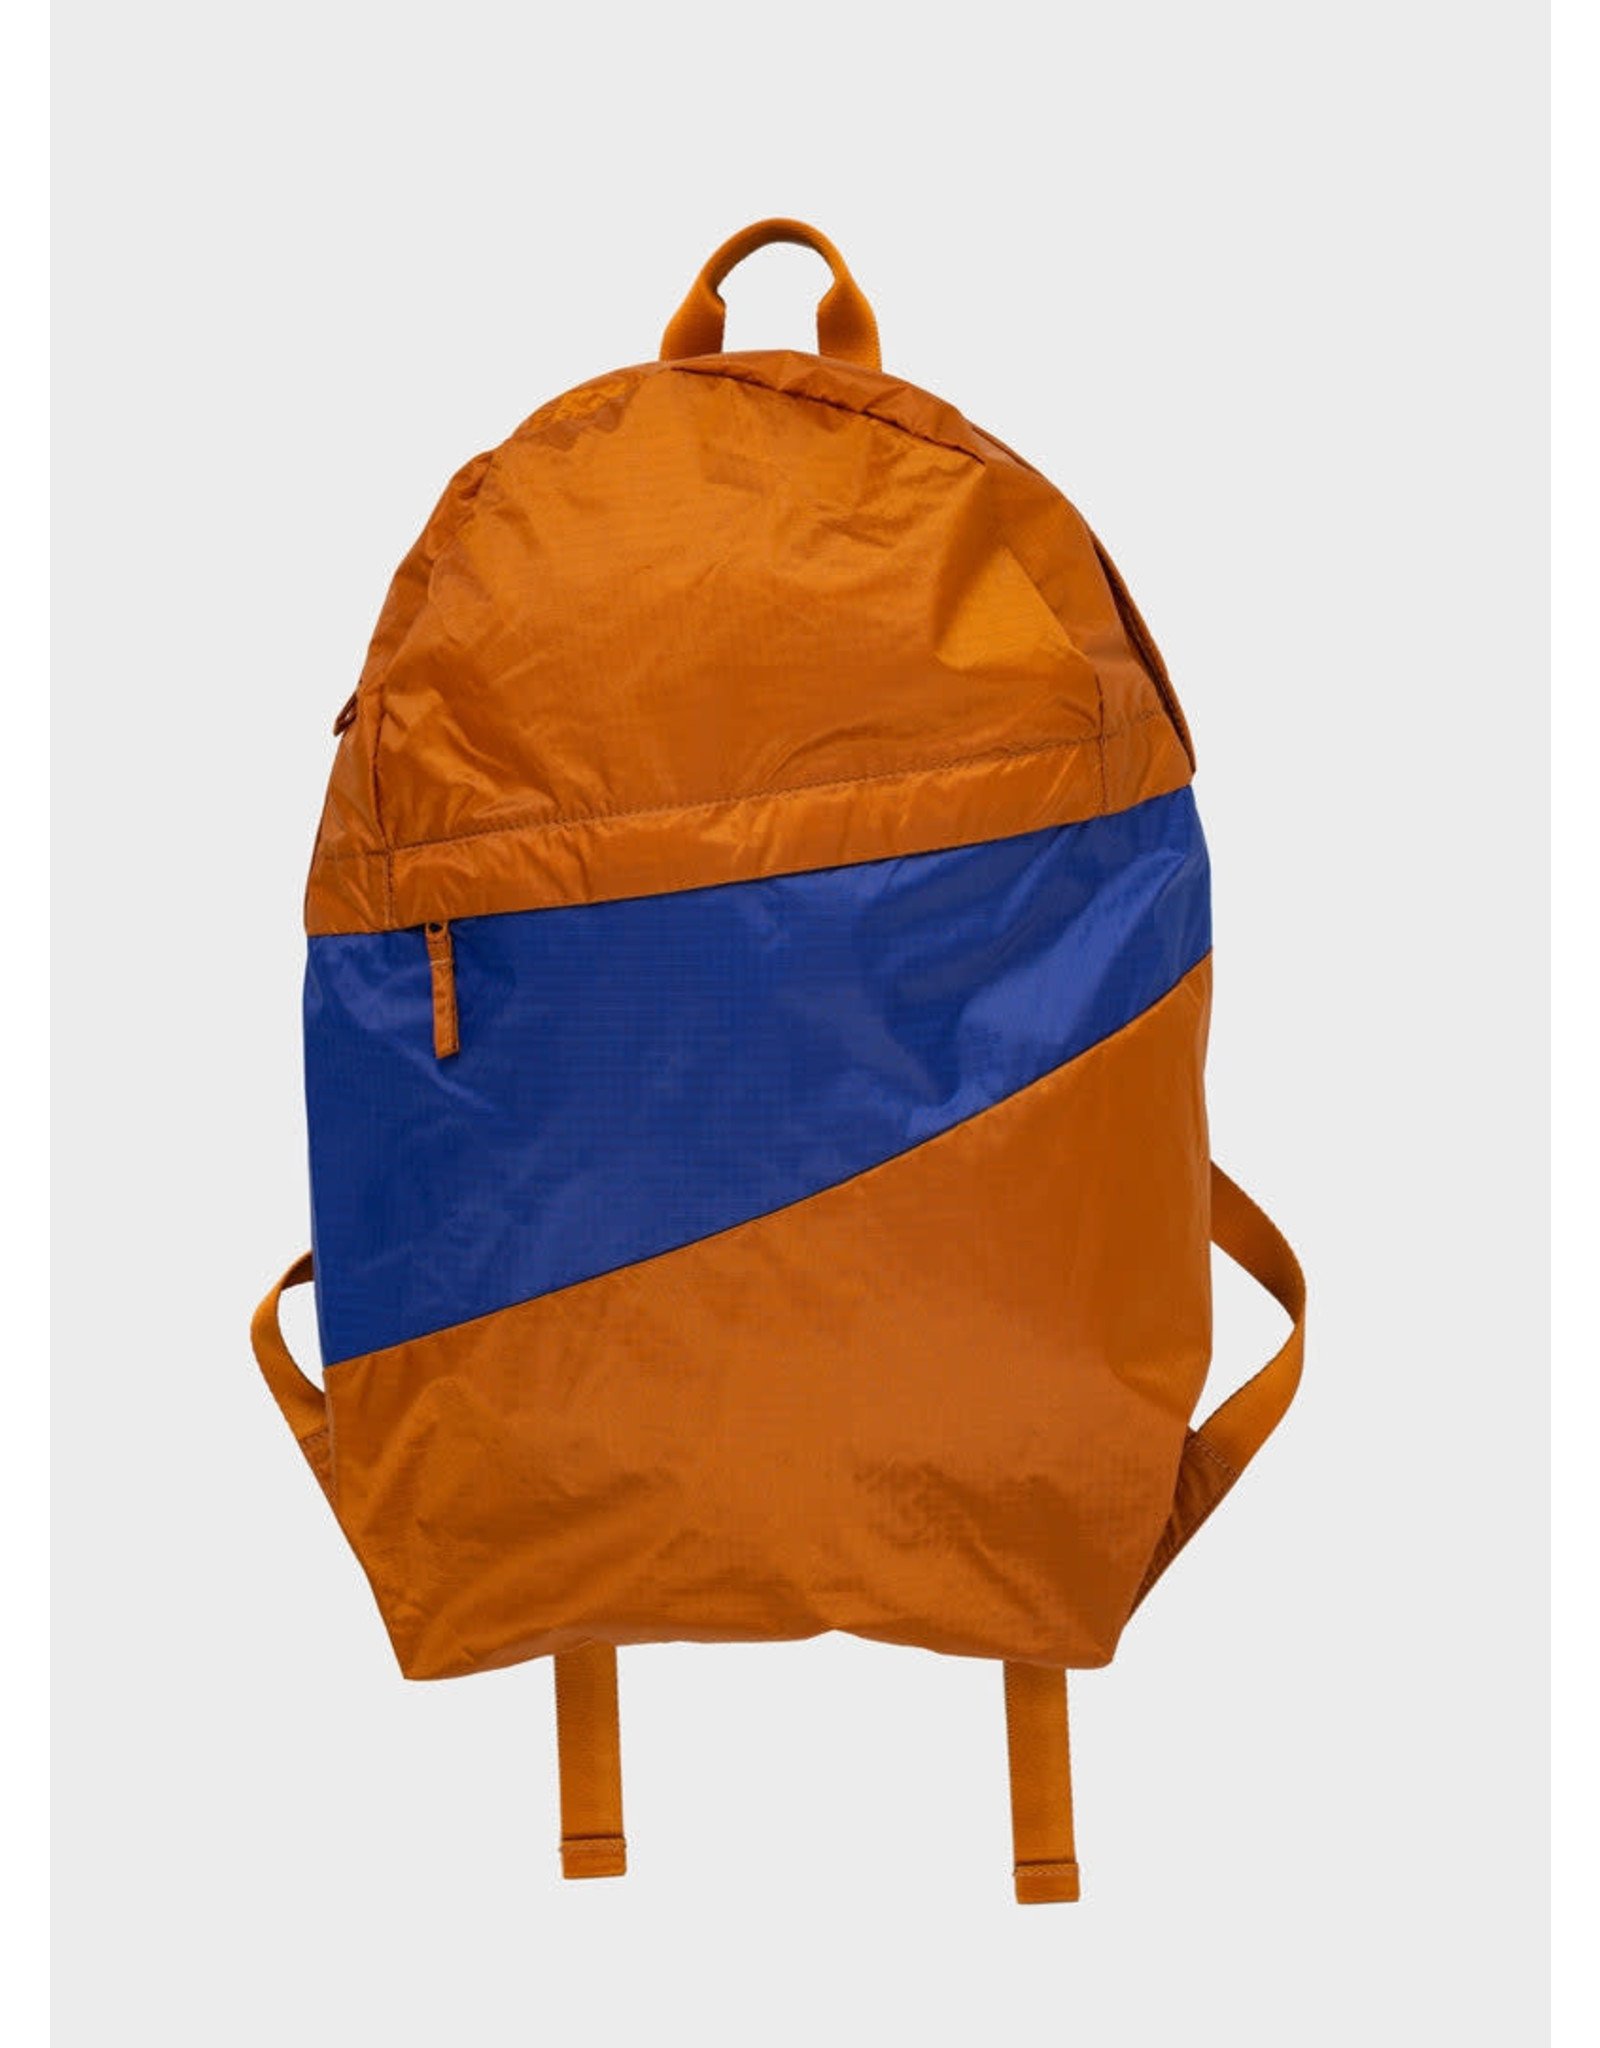 Susan Bijl Foldable Backpack L, Sample & Electric Blue - 54 x 28 x 15 cm